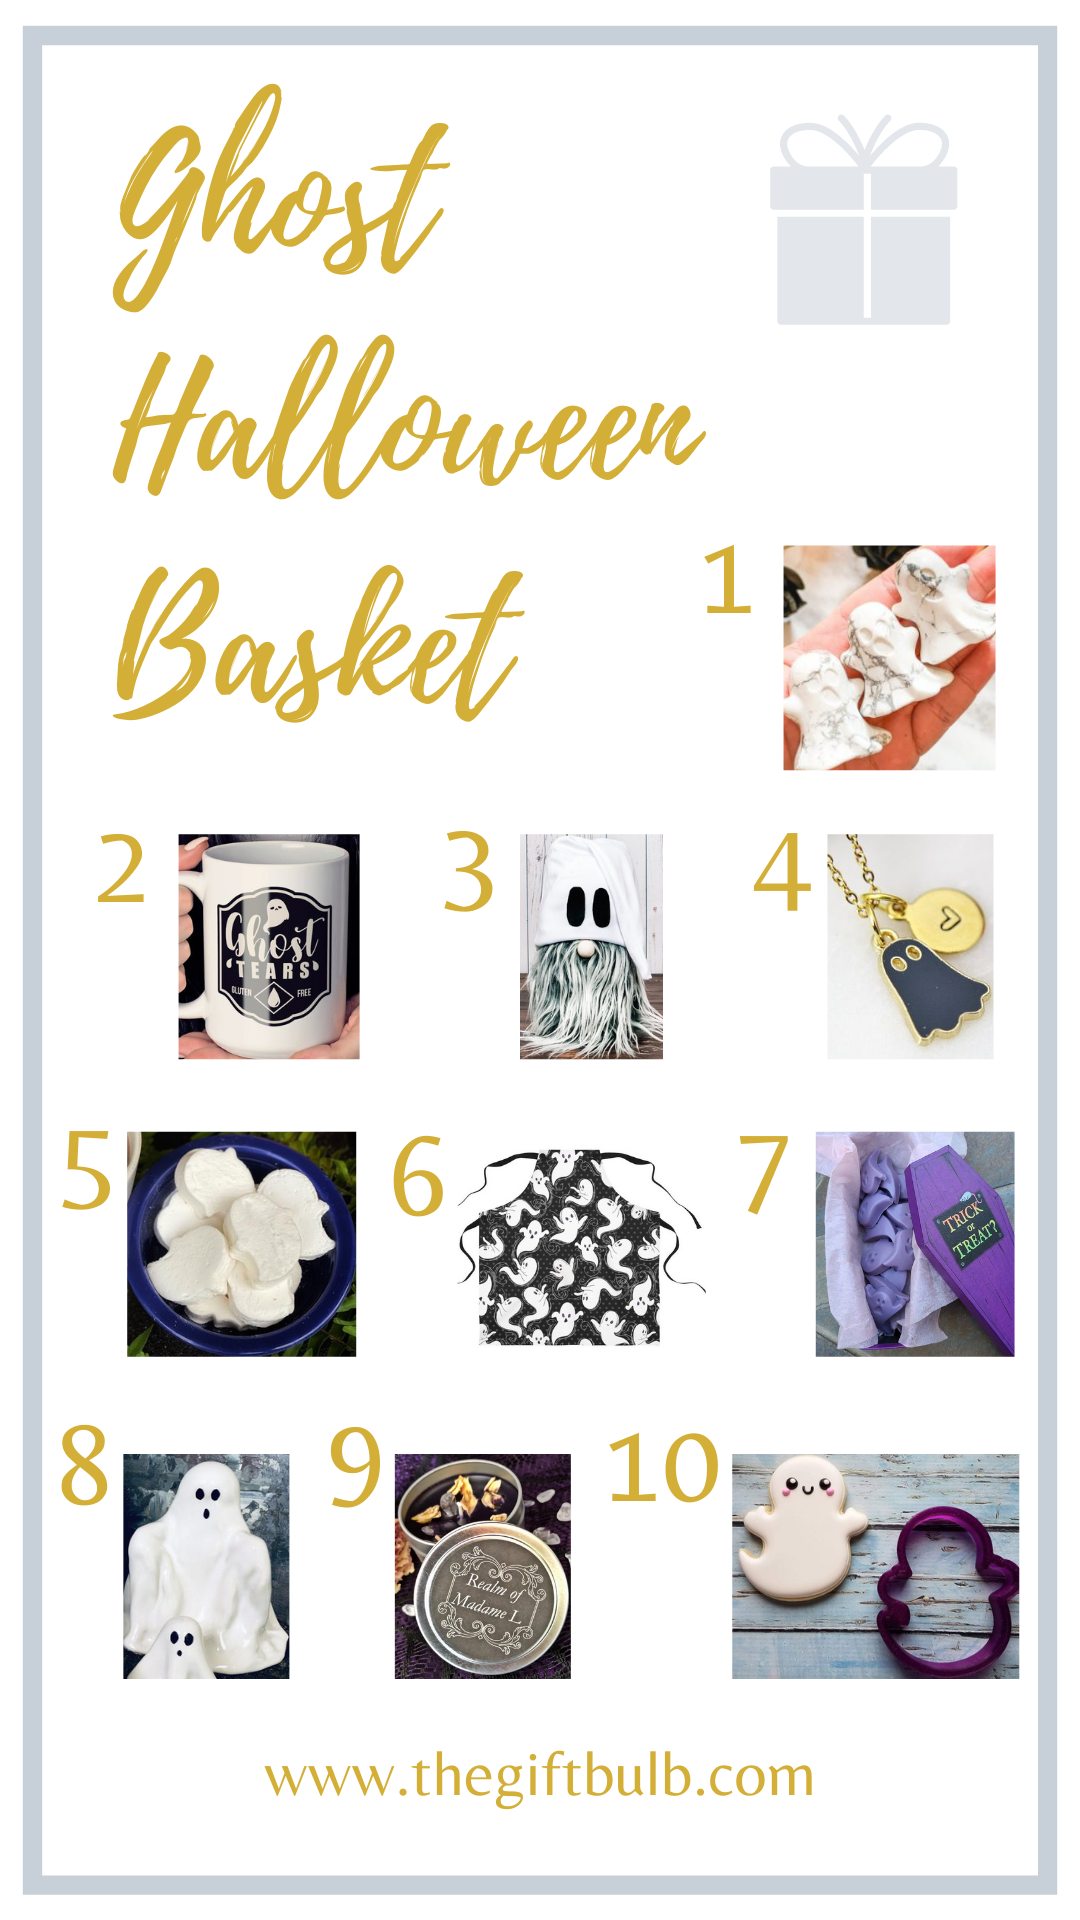 Ghost Halloween Basket